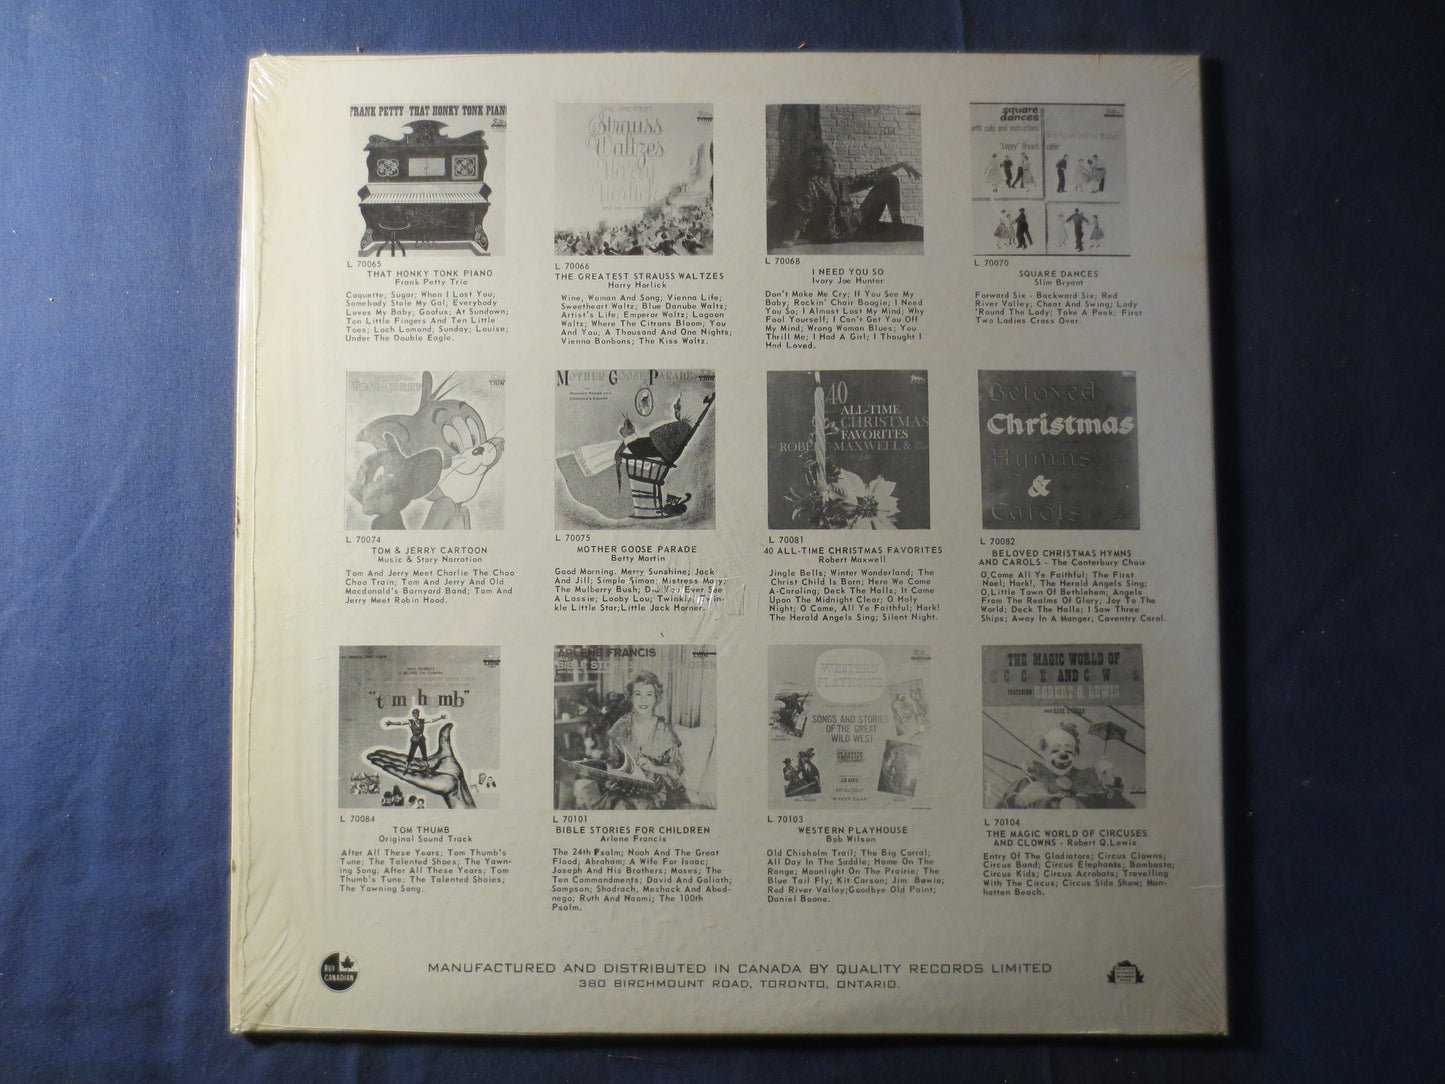 FRANK PETTY, That HONKY Tonk Piano, Ragtime Records, Vintage Vinyl, Record Vinyl, Record, Vinyl Record, Vinyl Album, Vinyl